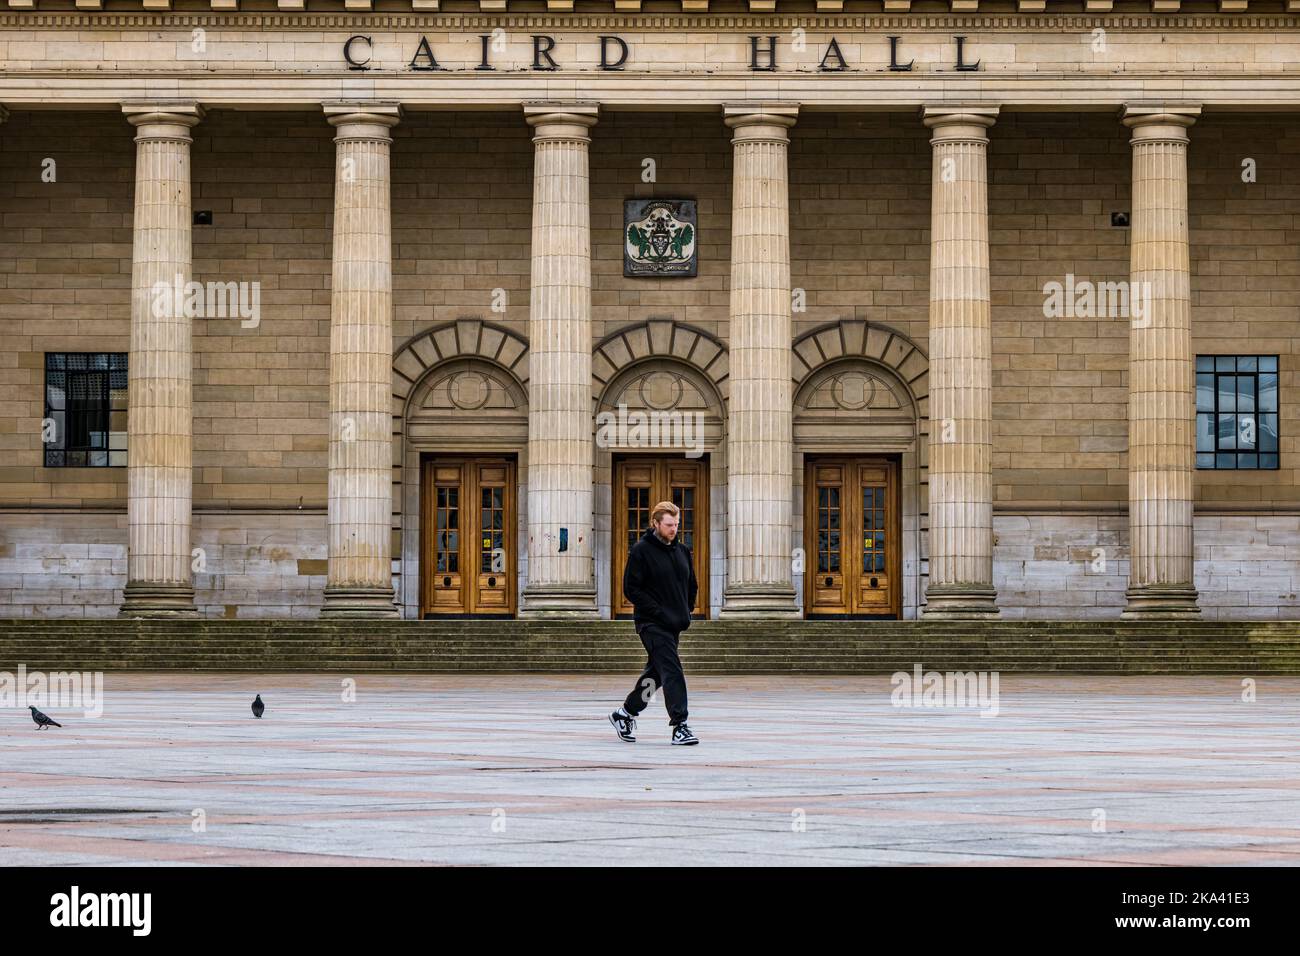 Grand Pillars and Doors of Caird Hall, sala de conciertos en City Square, Dundee, Escocia, Reino Unido Foto de stock